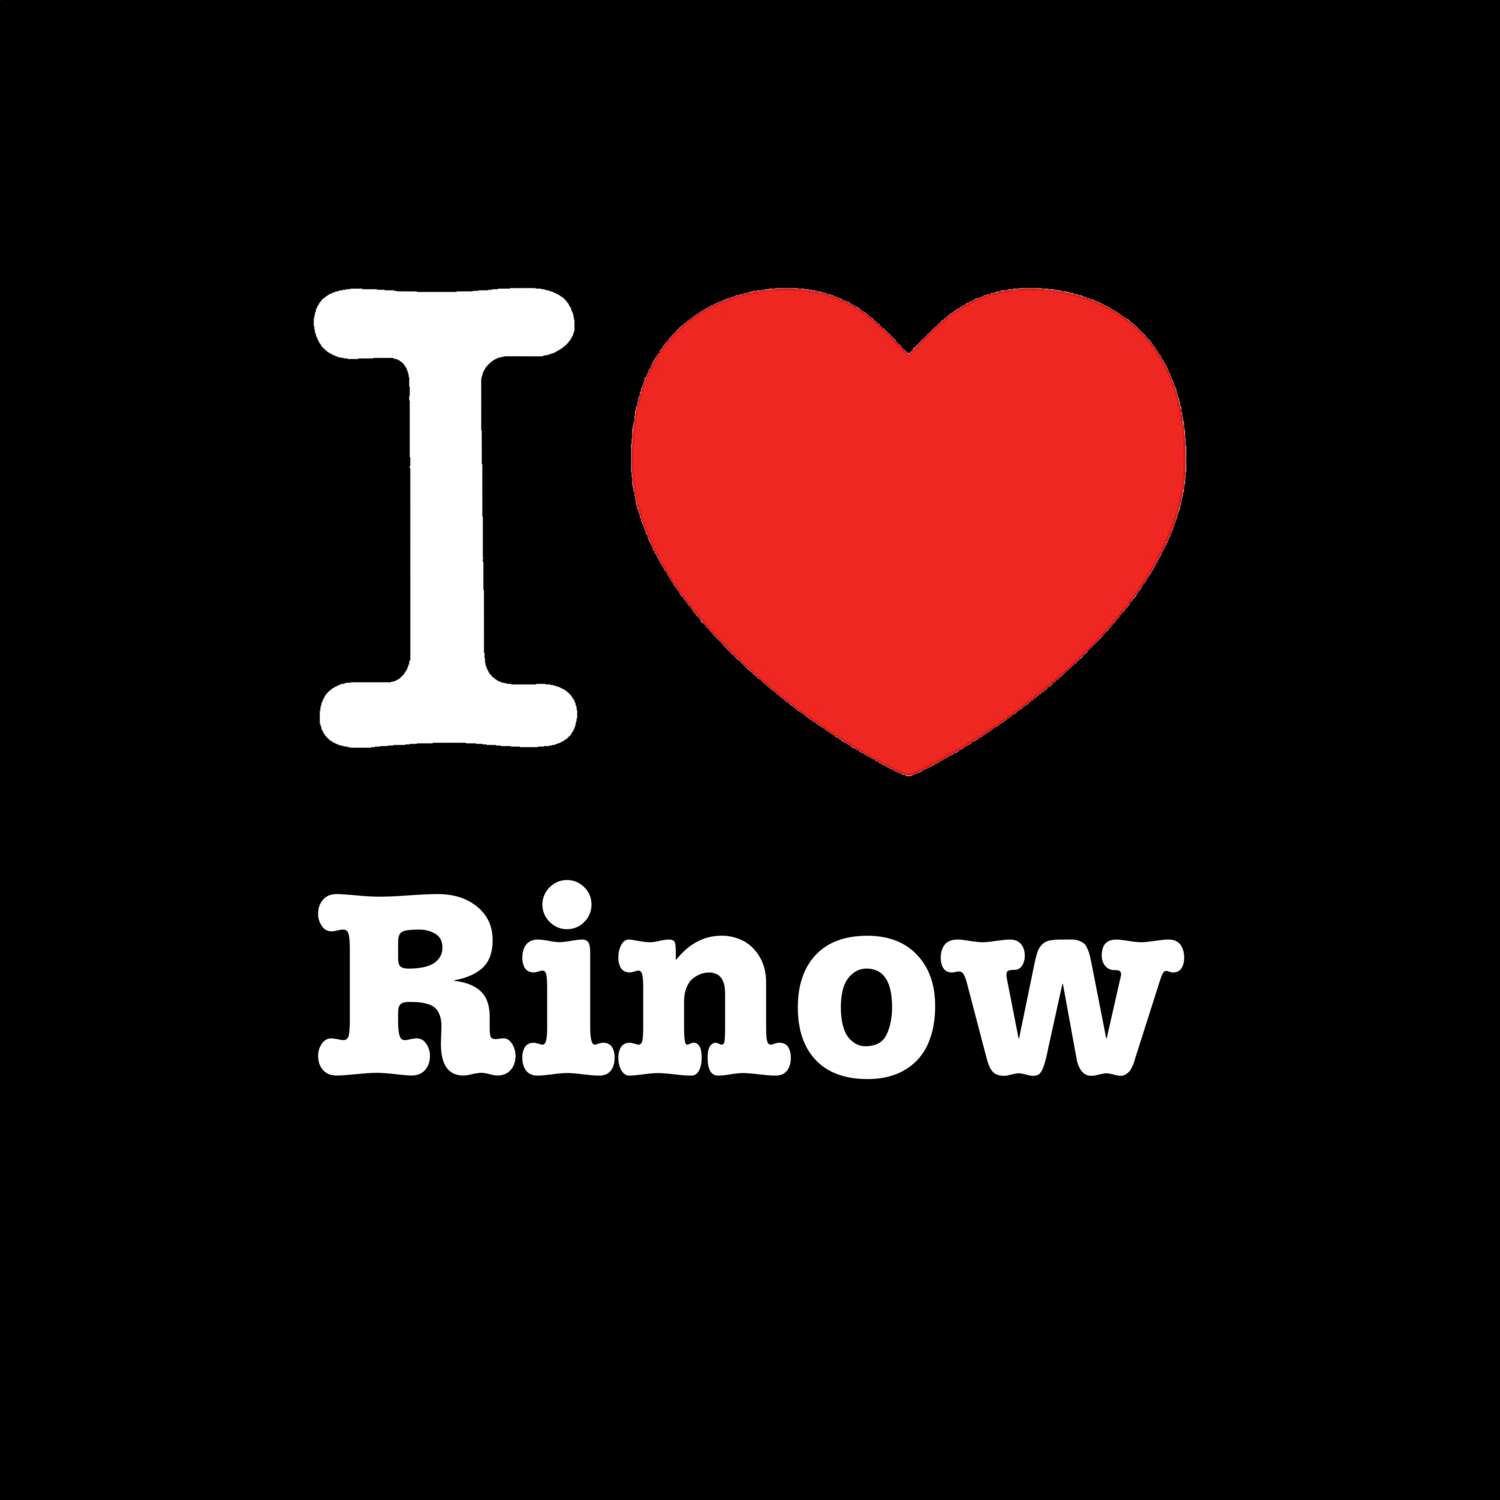 Rinow T-Shirt »I love«